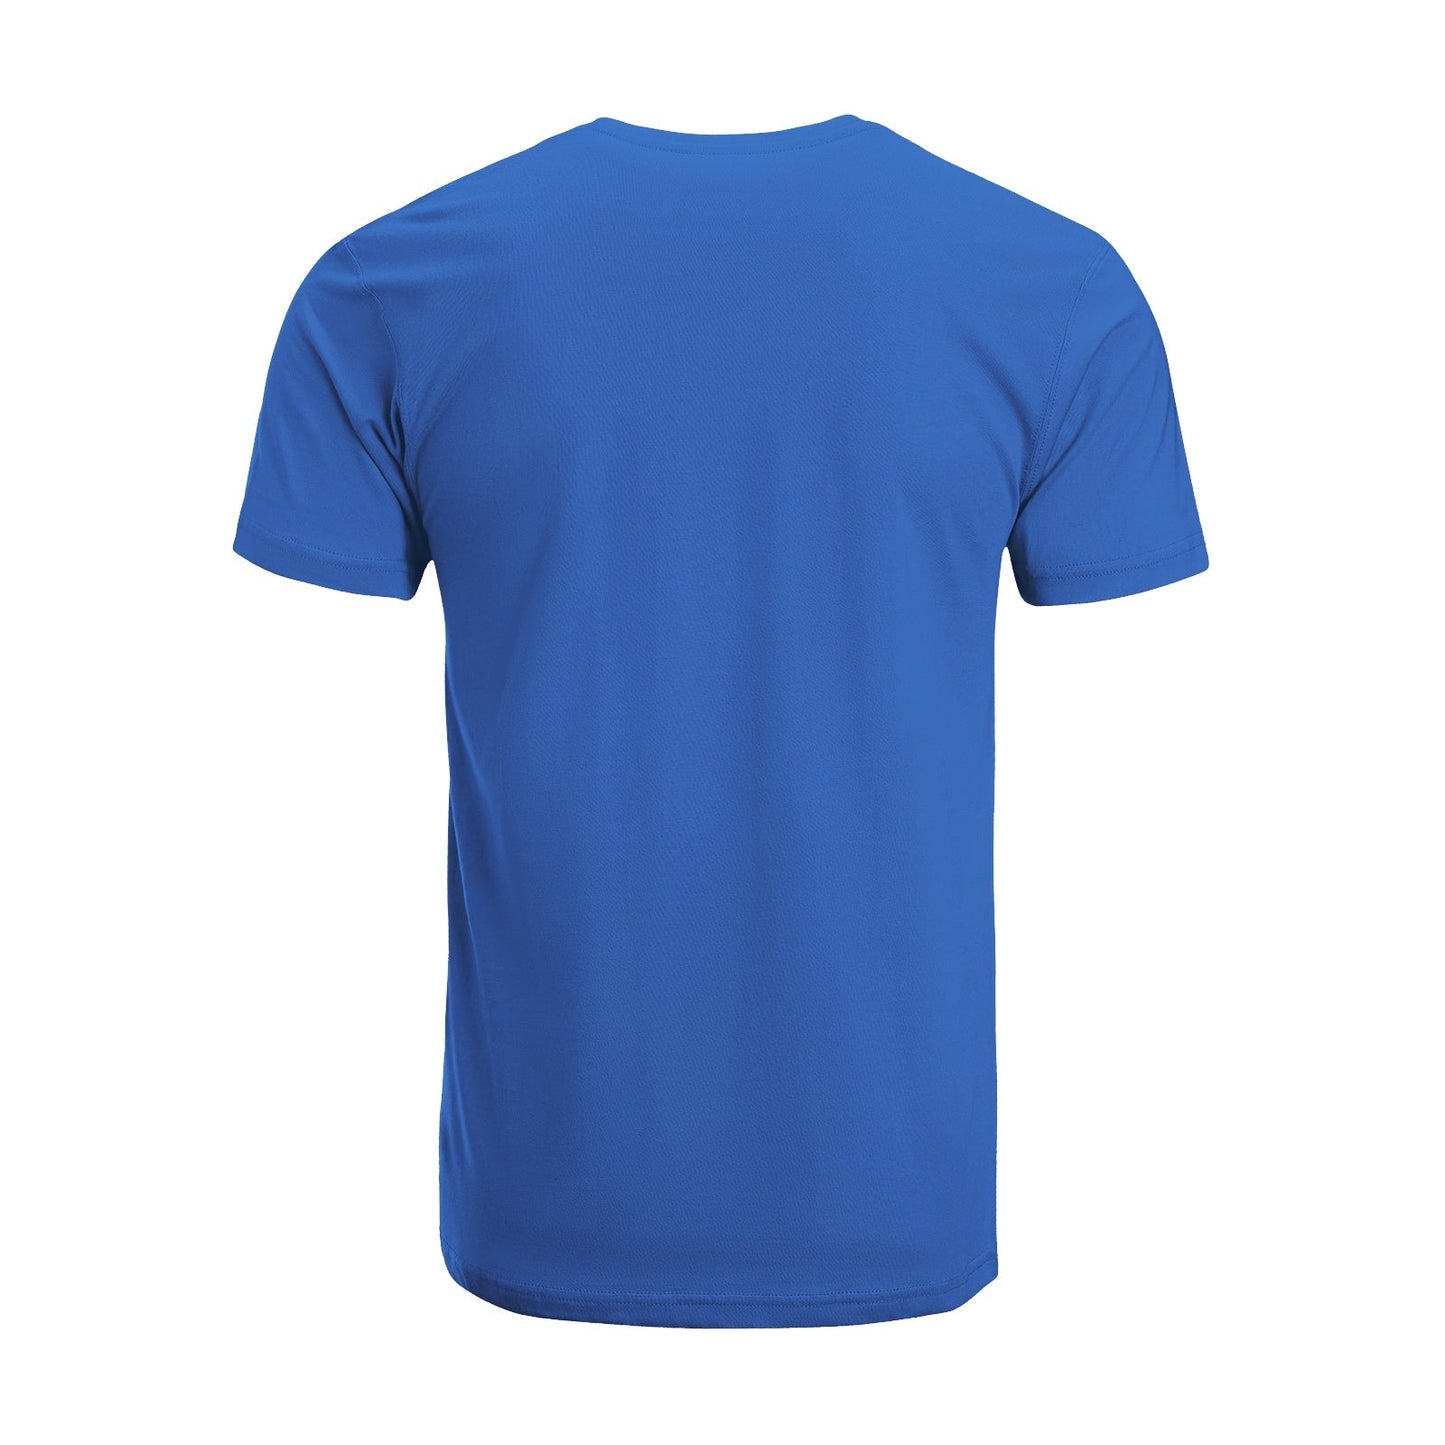 Unisex Short Sleeve Crew Neck Cotton Jersey T-Shirt USA 09